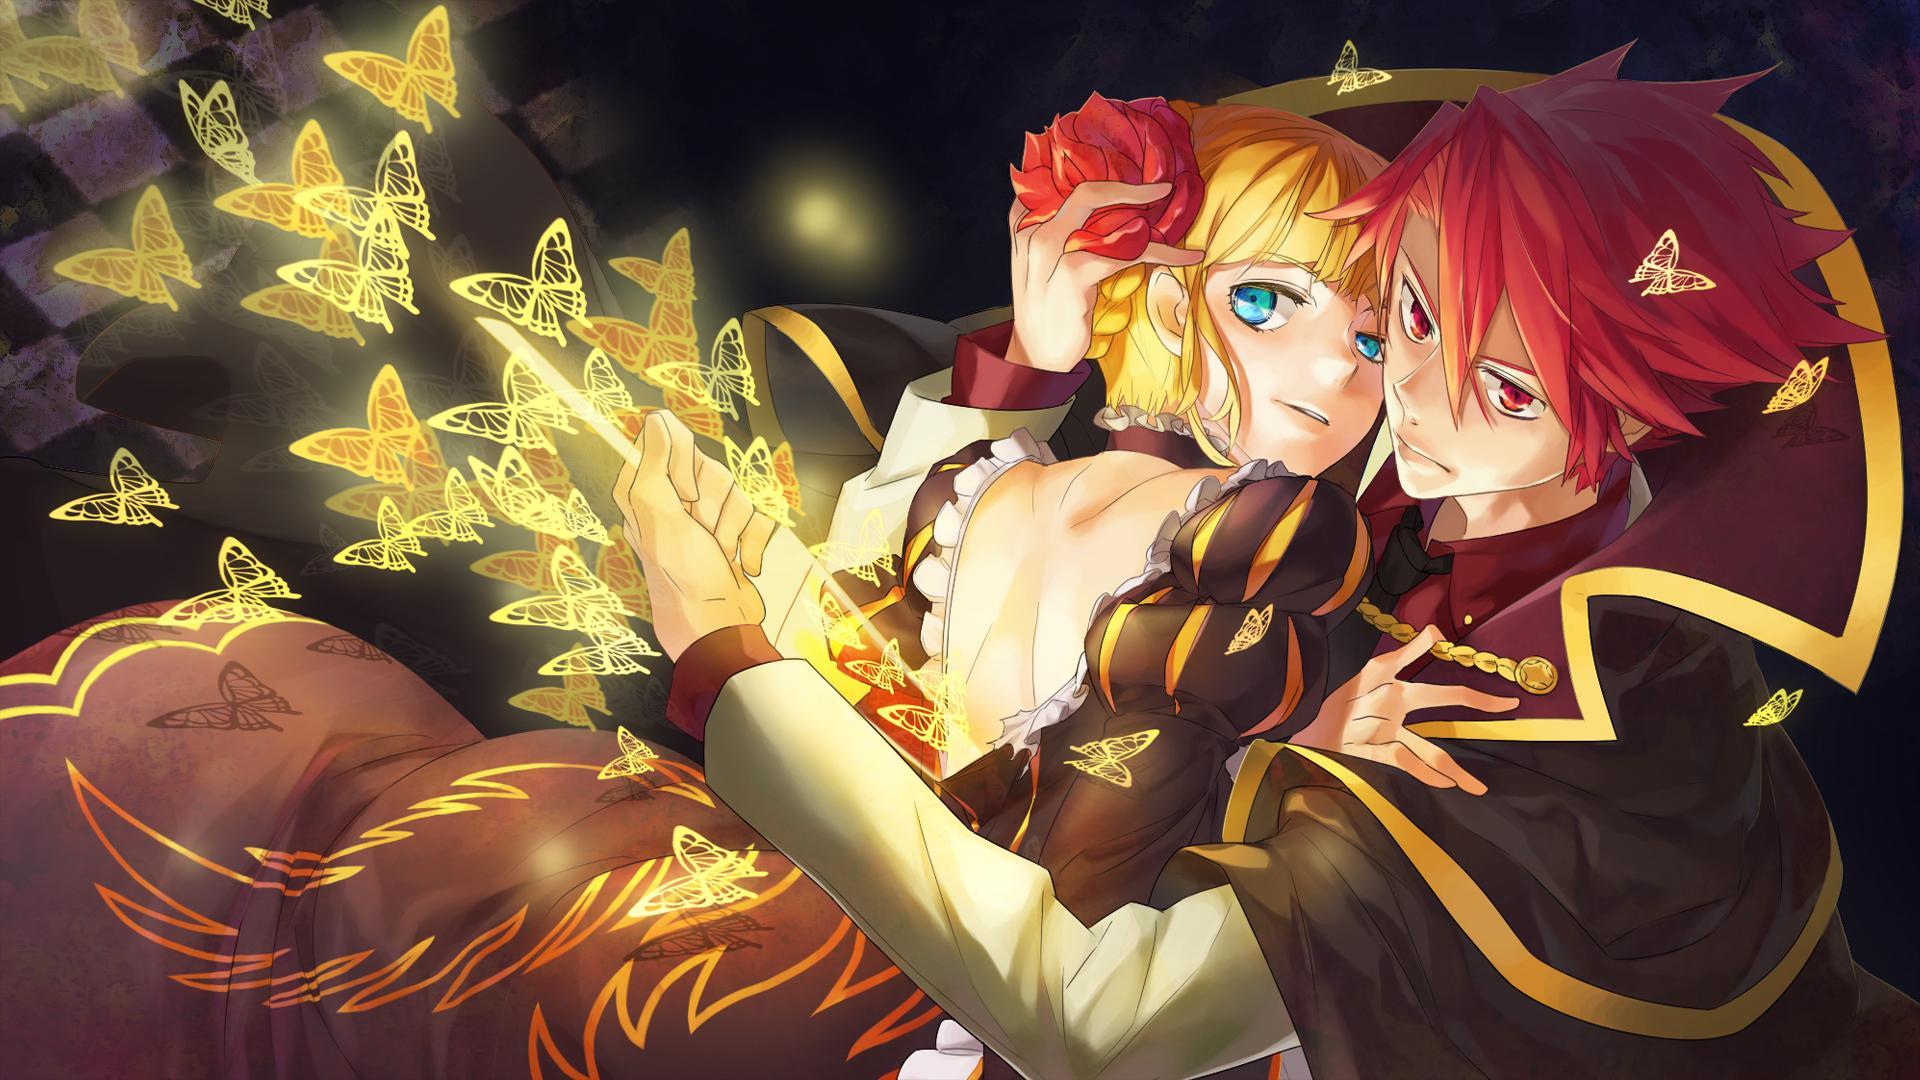 Beautiful Anime Couple Wallpaper HD Image